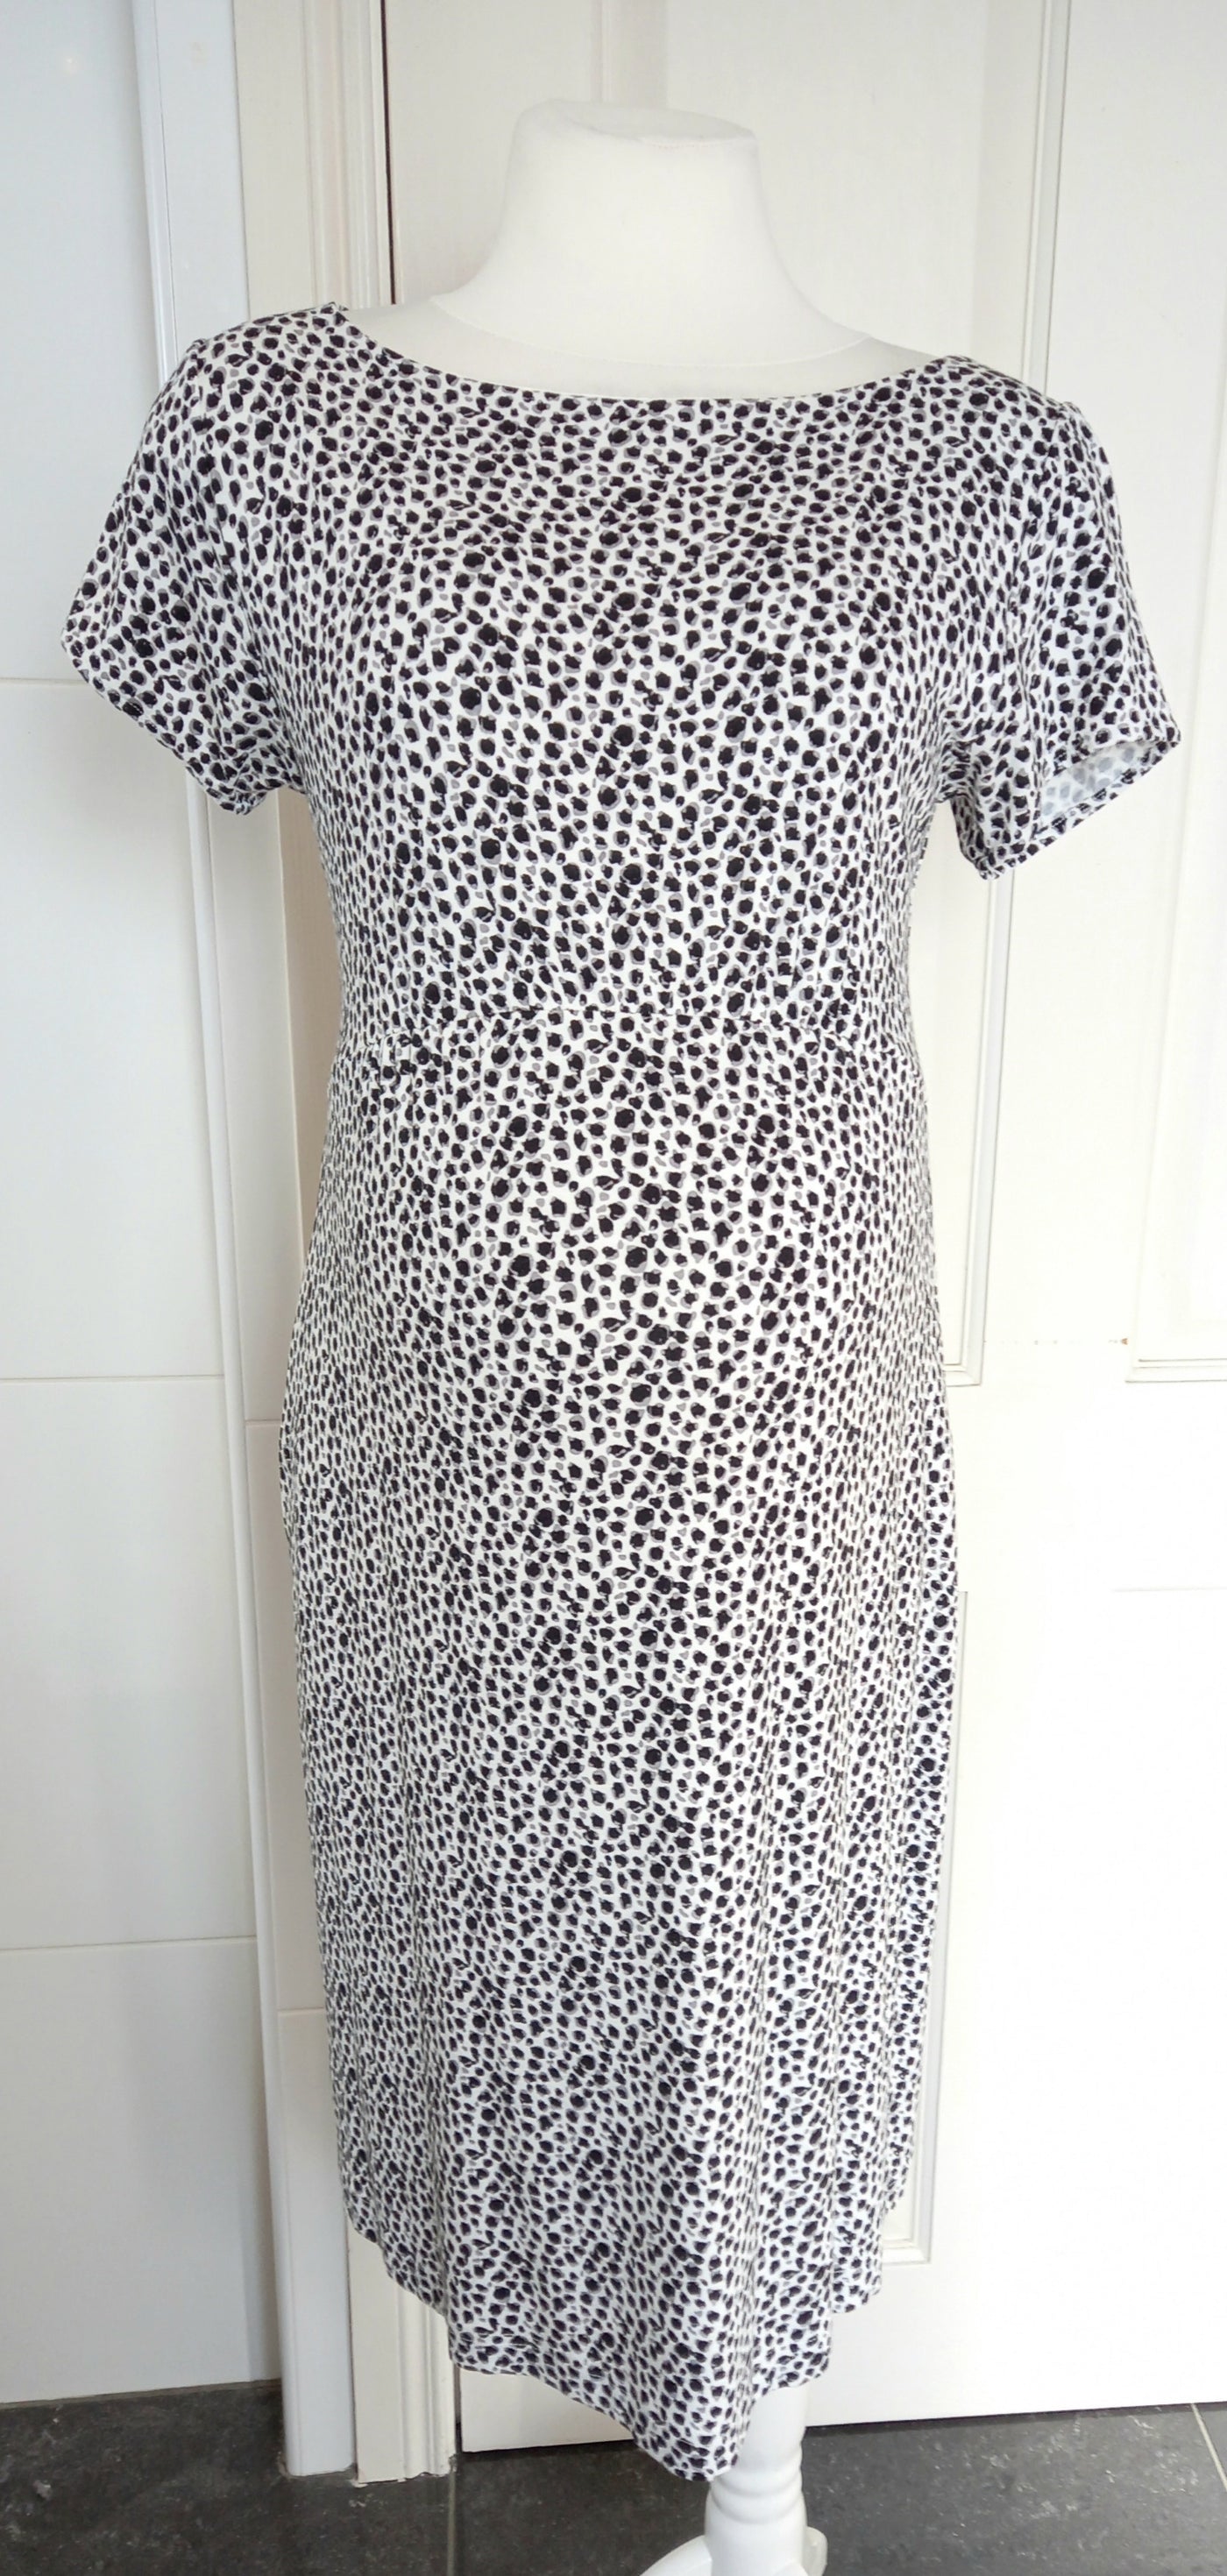 Tiffany Rose Sara Shift Dress in Snow Leopard - Size 4 (UK 14/16)